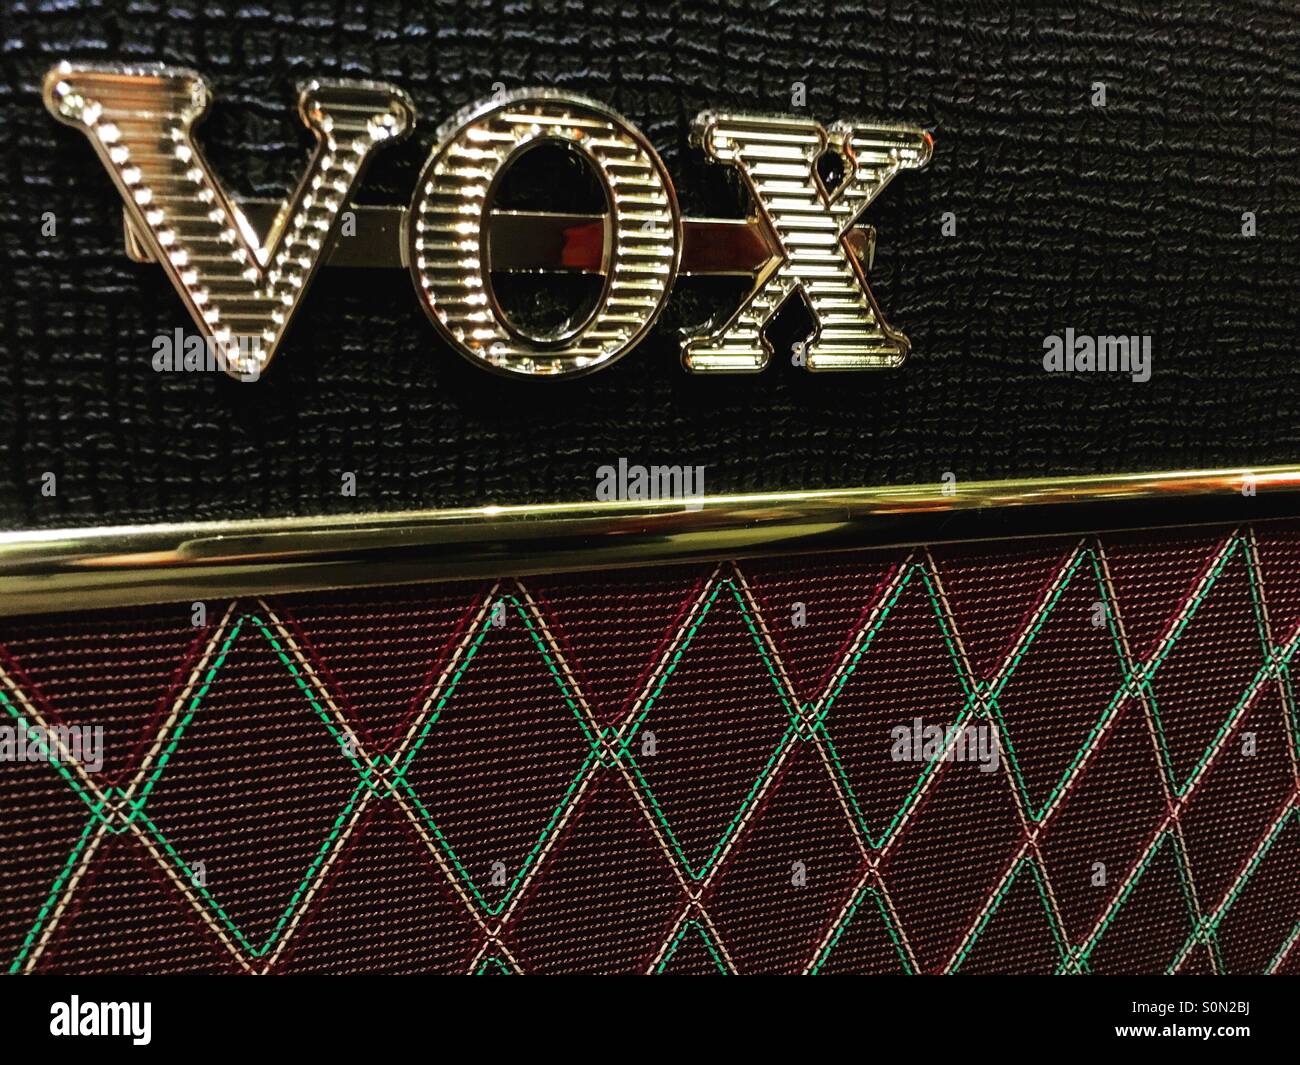 Close-up of a Vox retro amplifier speaker. Stock Photo